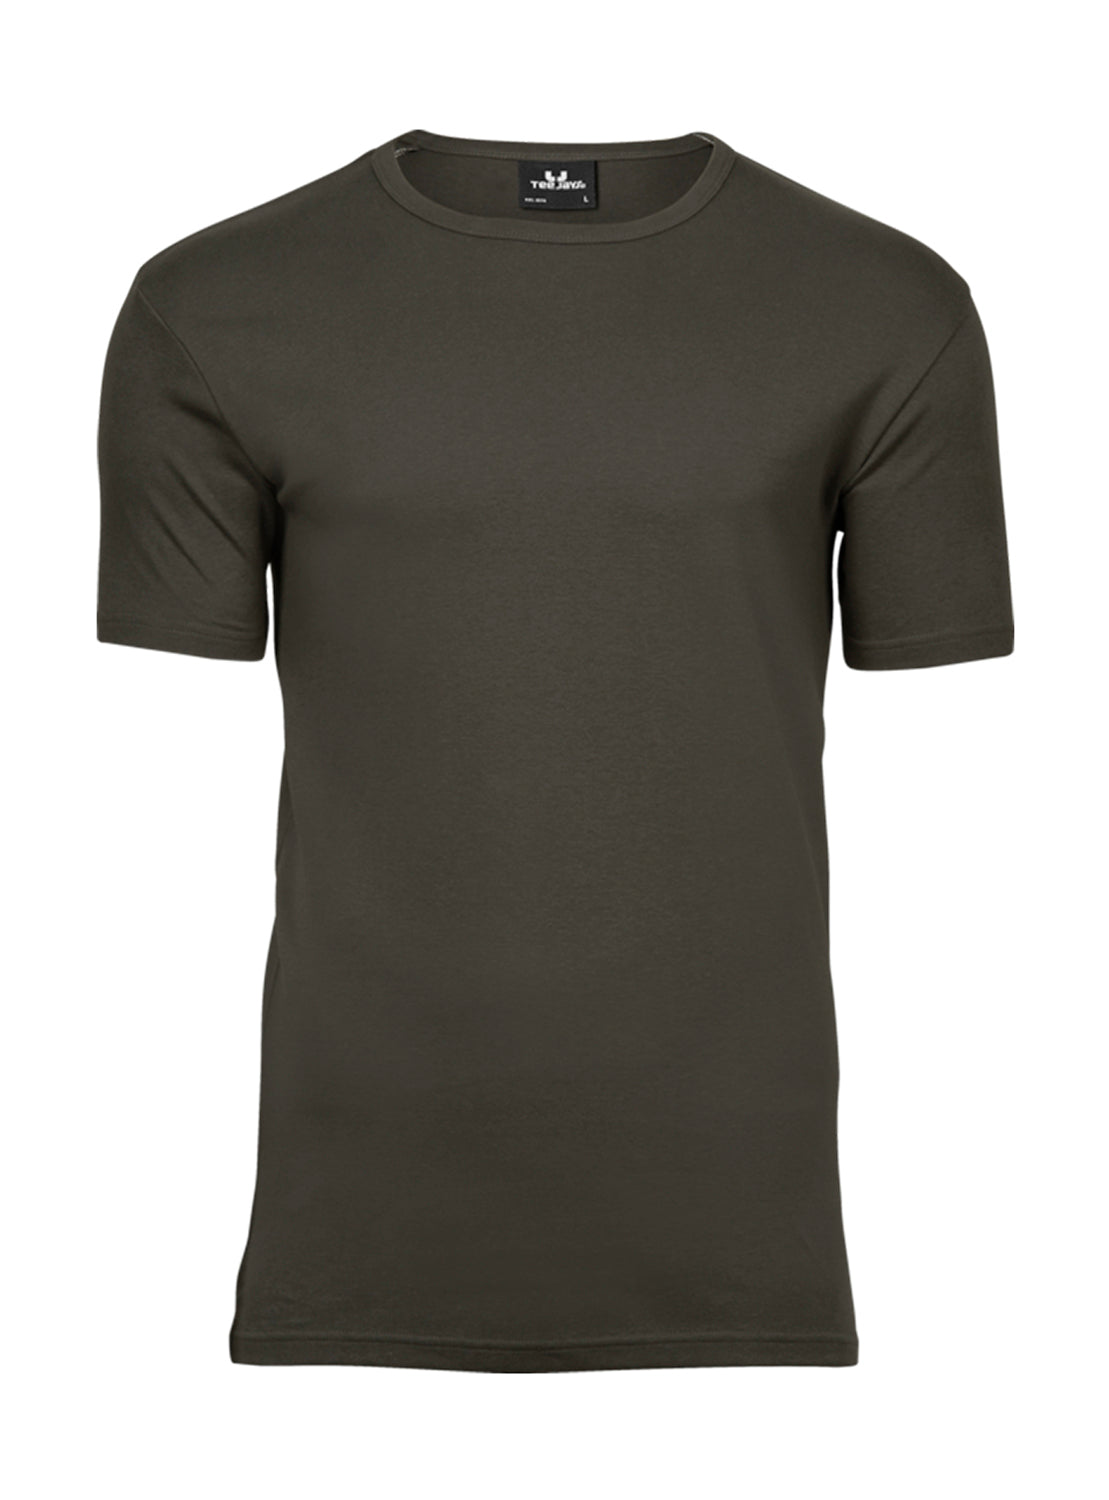 Mens Interlock T-Shirt 153.54